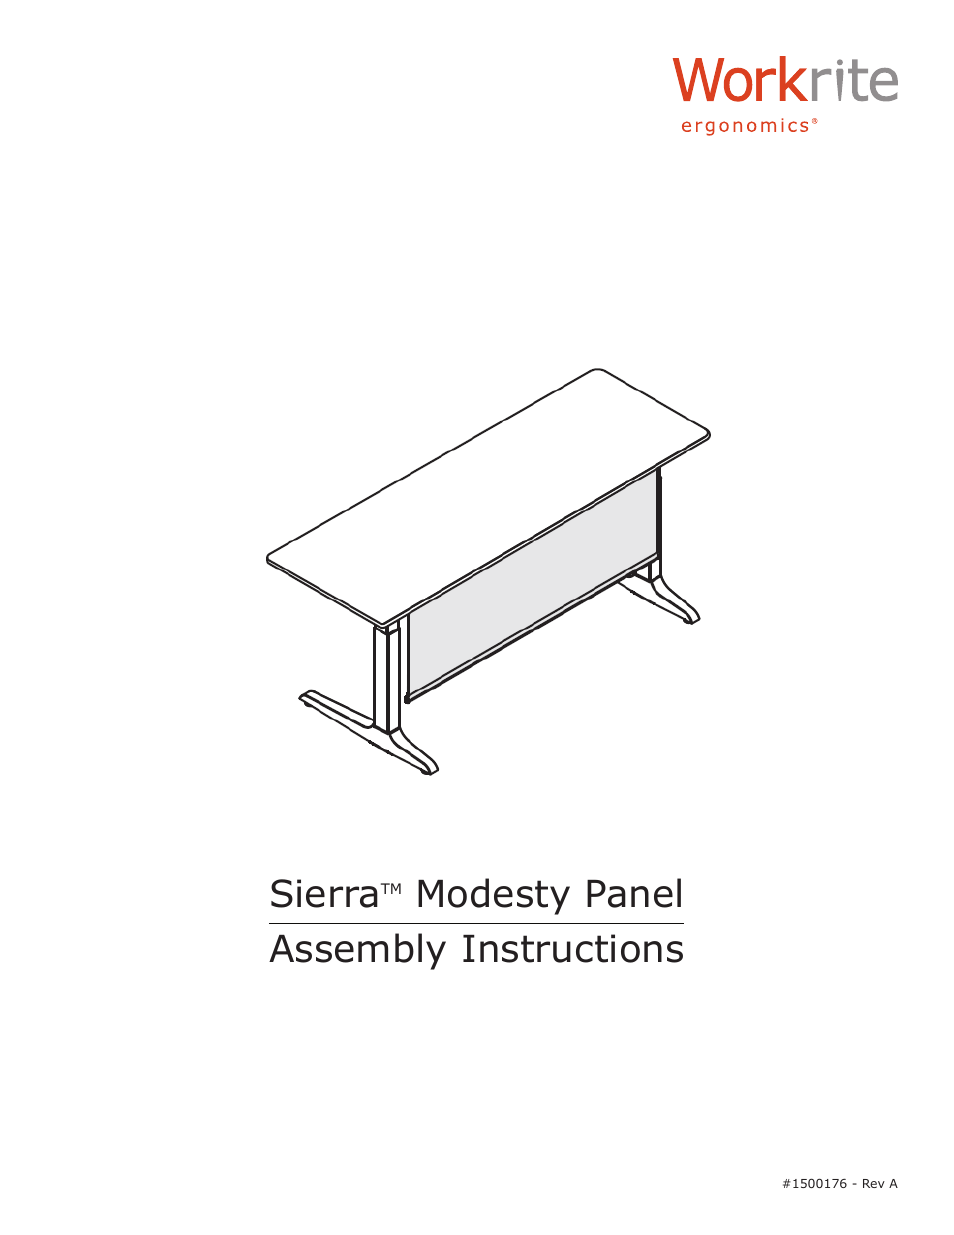 Sierra Modesty Panel